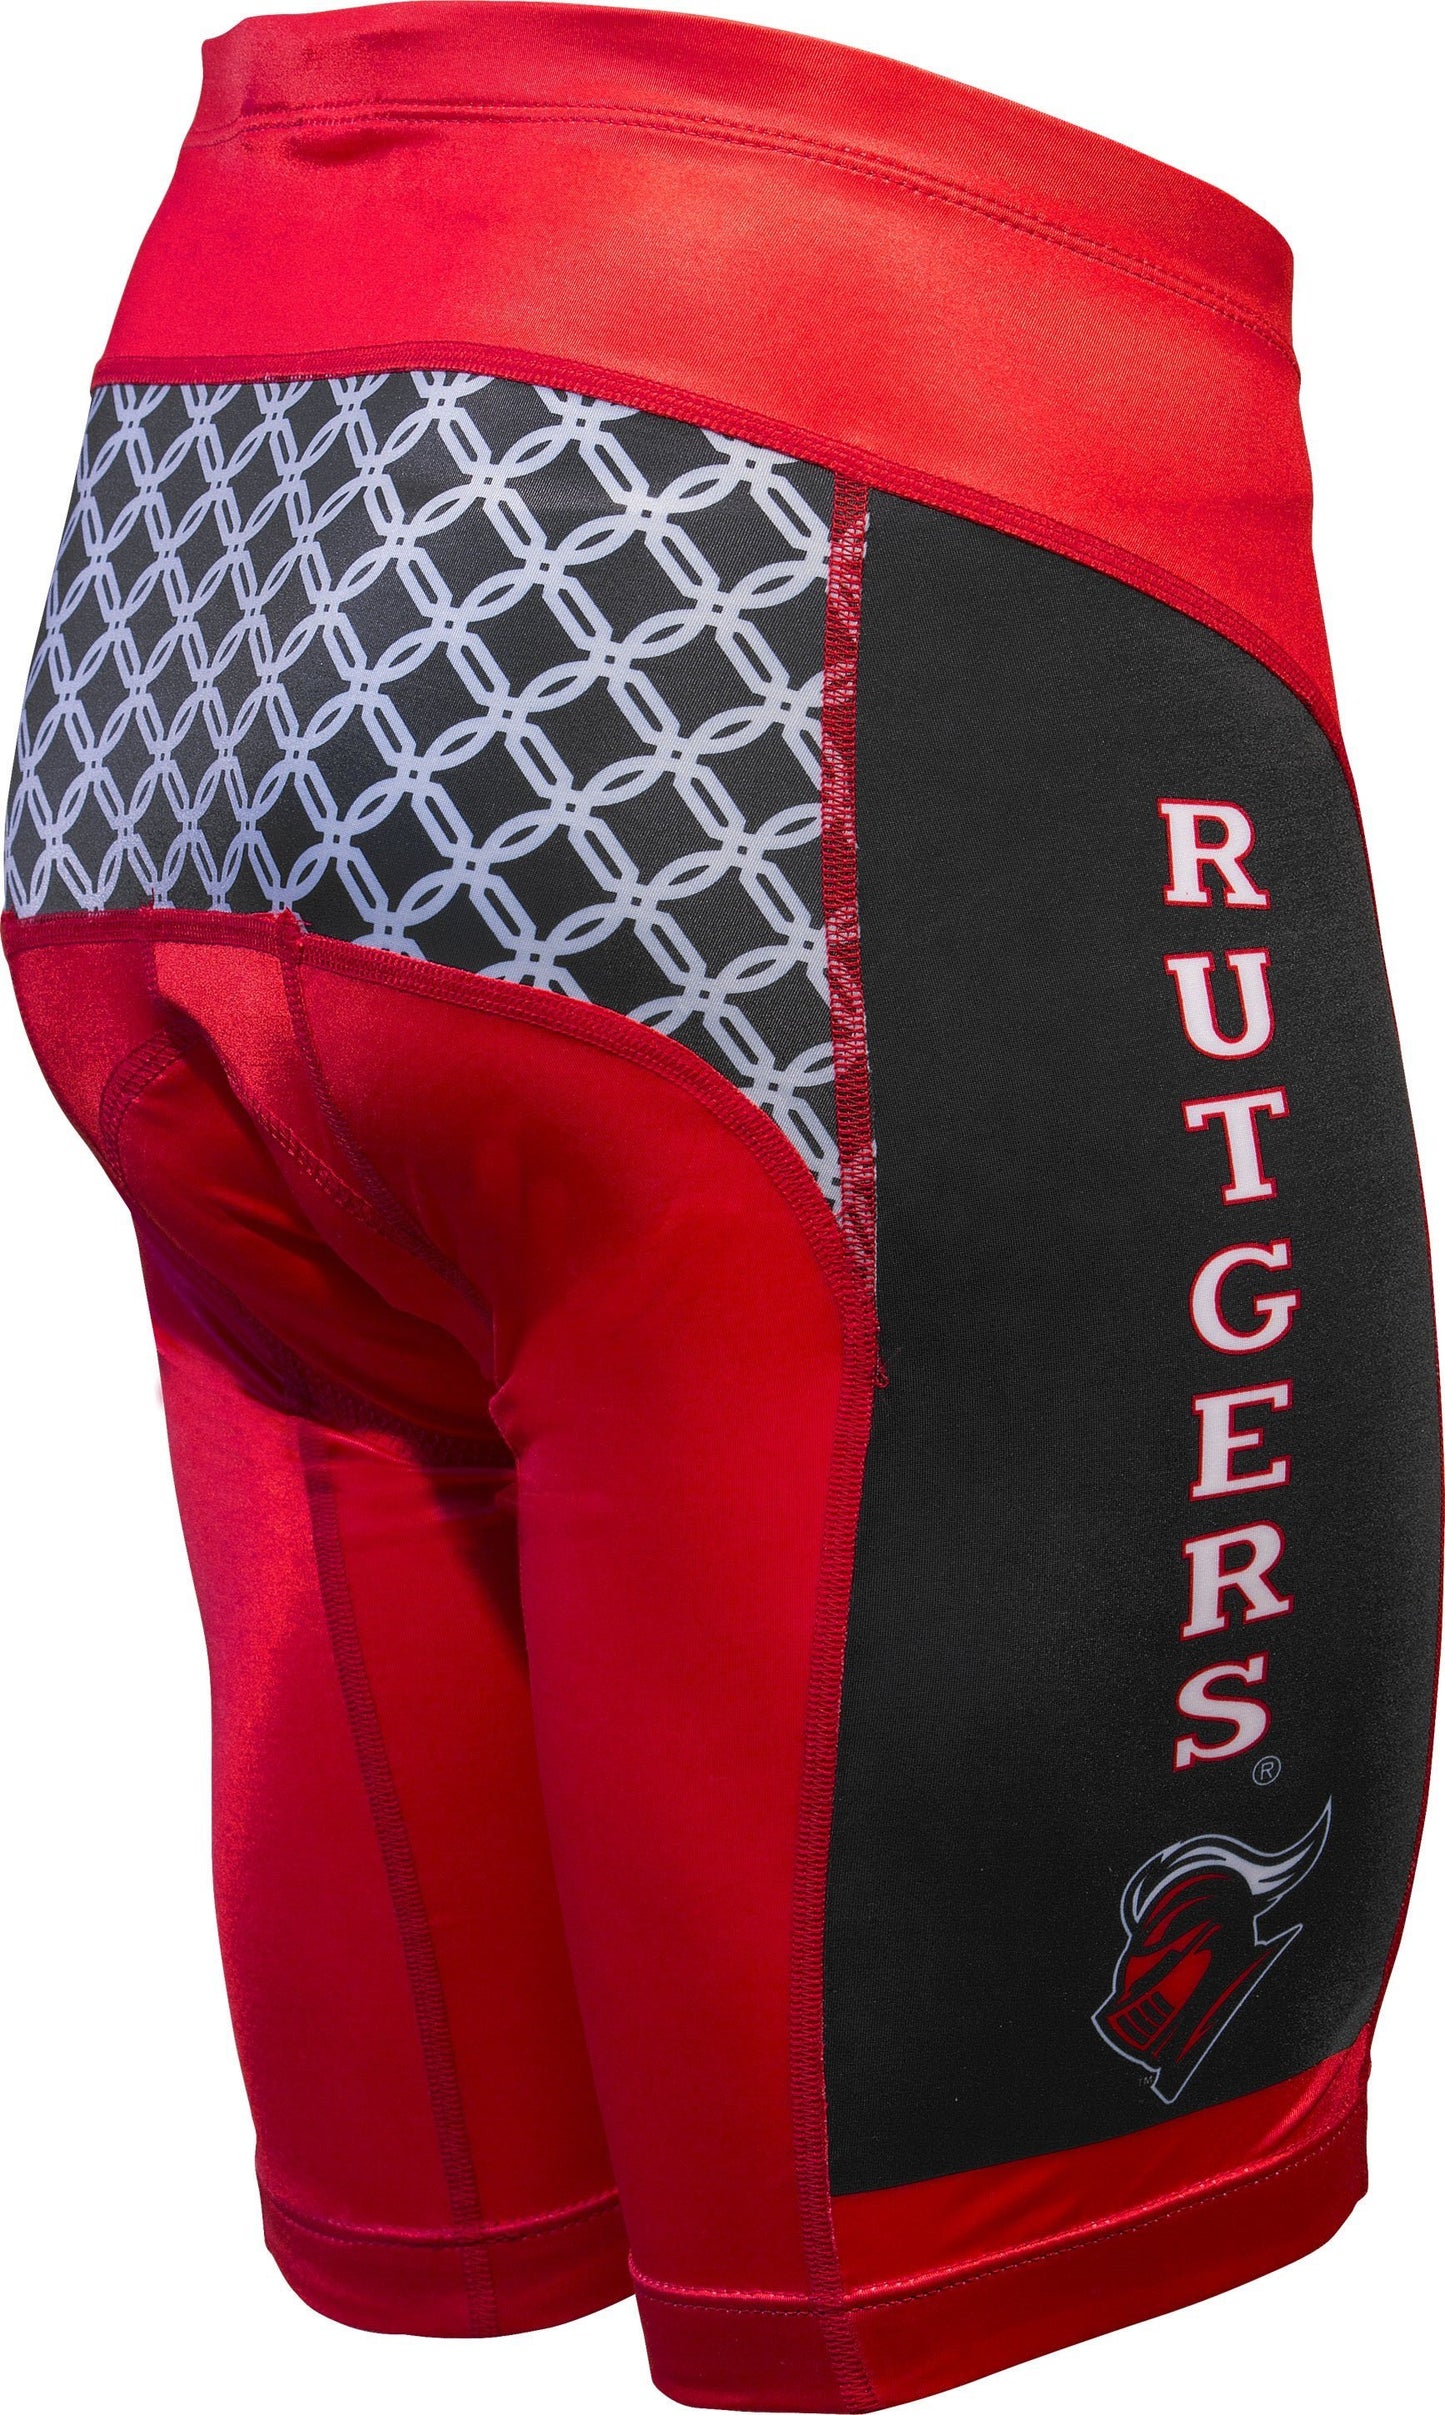 Rutgers Scarlet Knights Men's Cycling Shorts (Small)